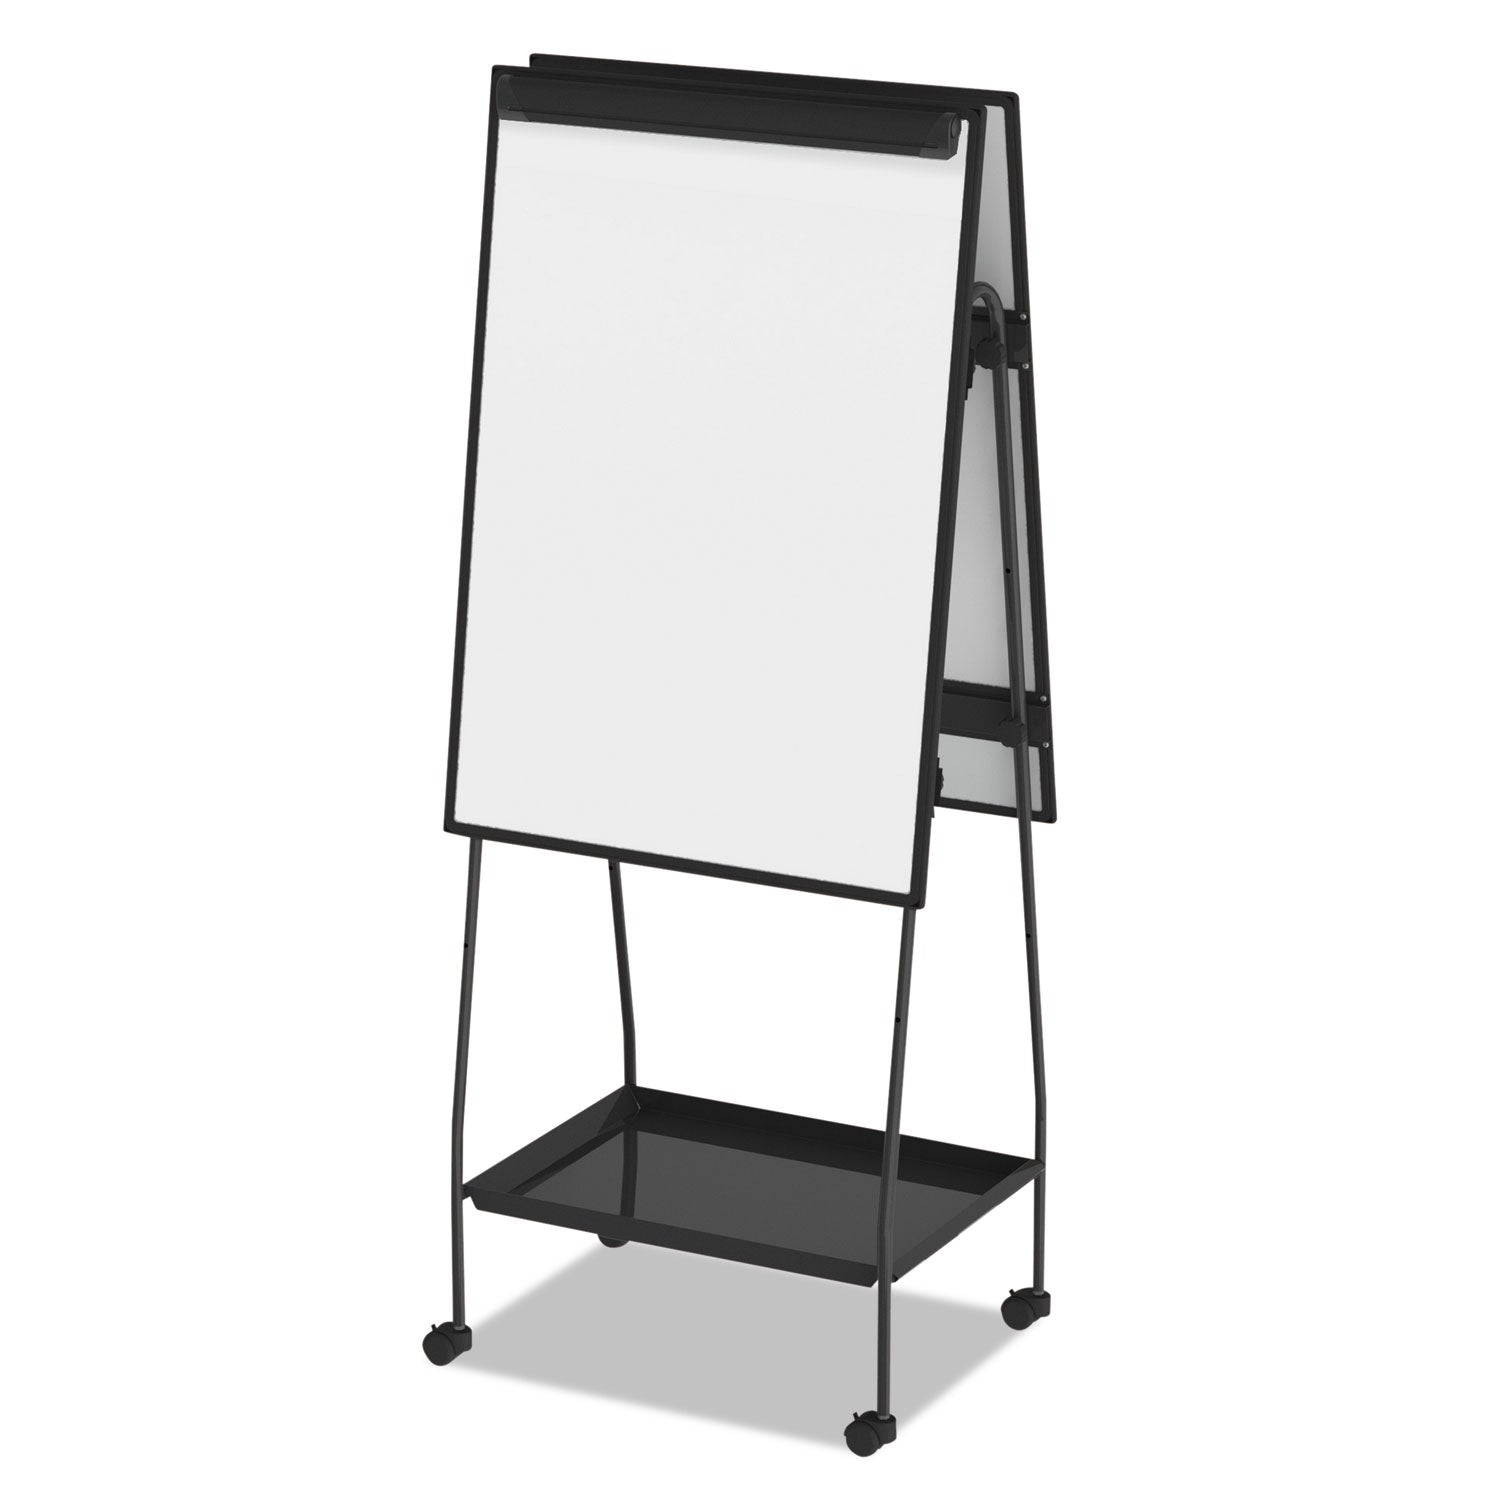 Creation Station Dry Erase Board, 29.5 x 74.88, White Surface, Black Metal Frame - 